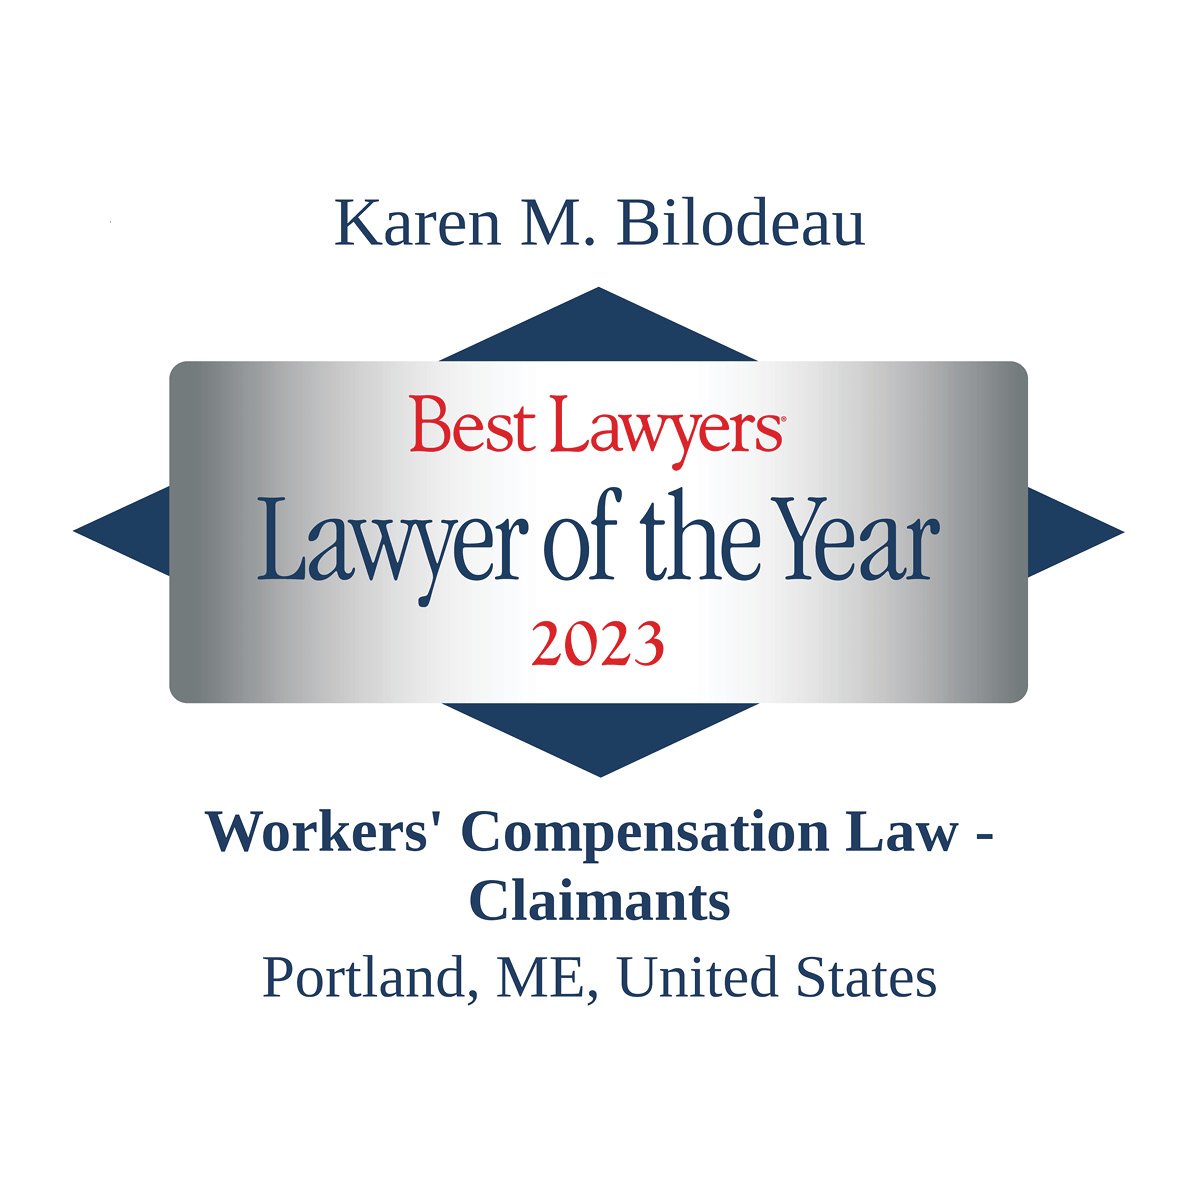 Best_Lawyers_2023_Karen_M_Bilodeau_Lawyer-of-the-Year_Traditional_Logo.jpg